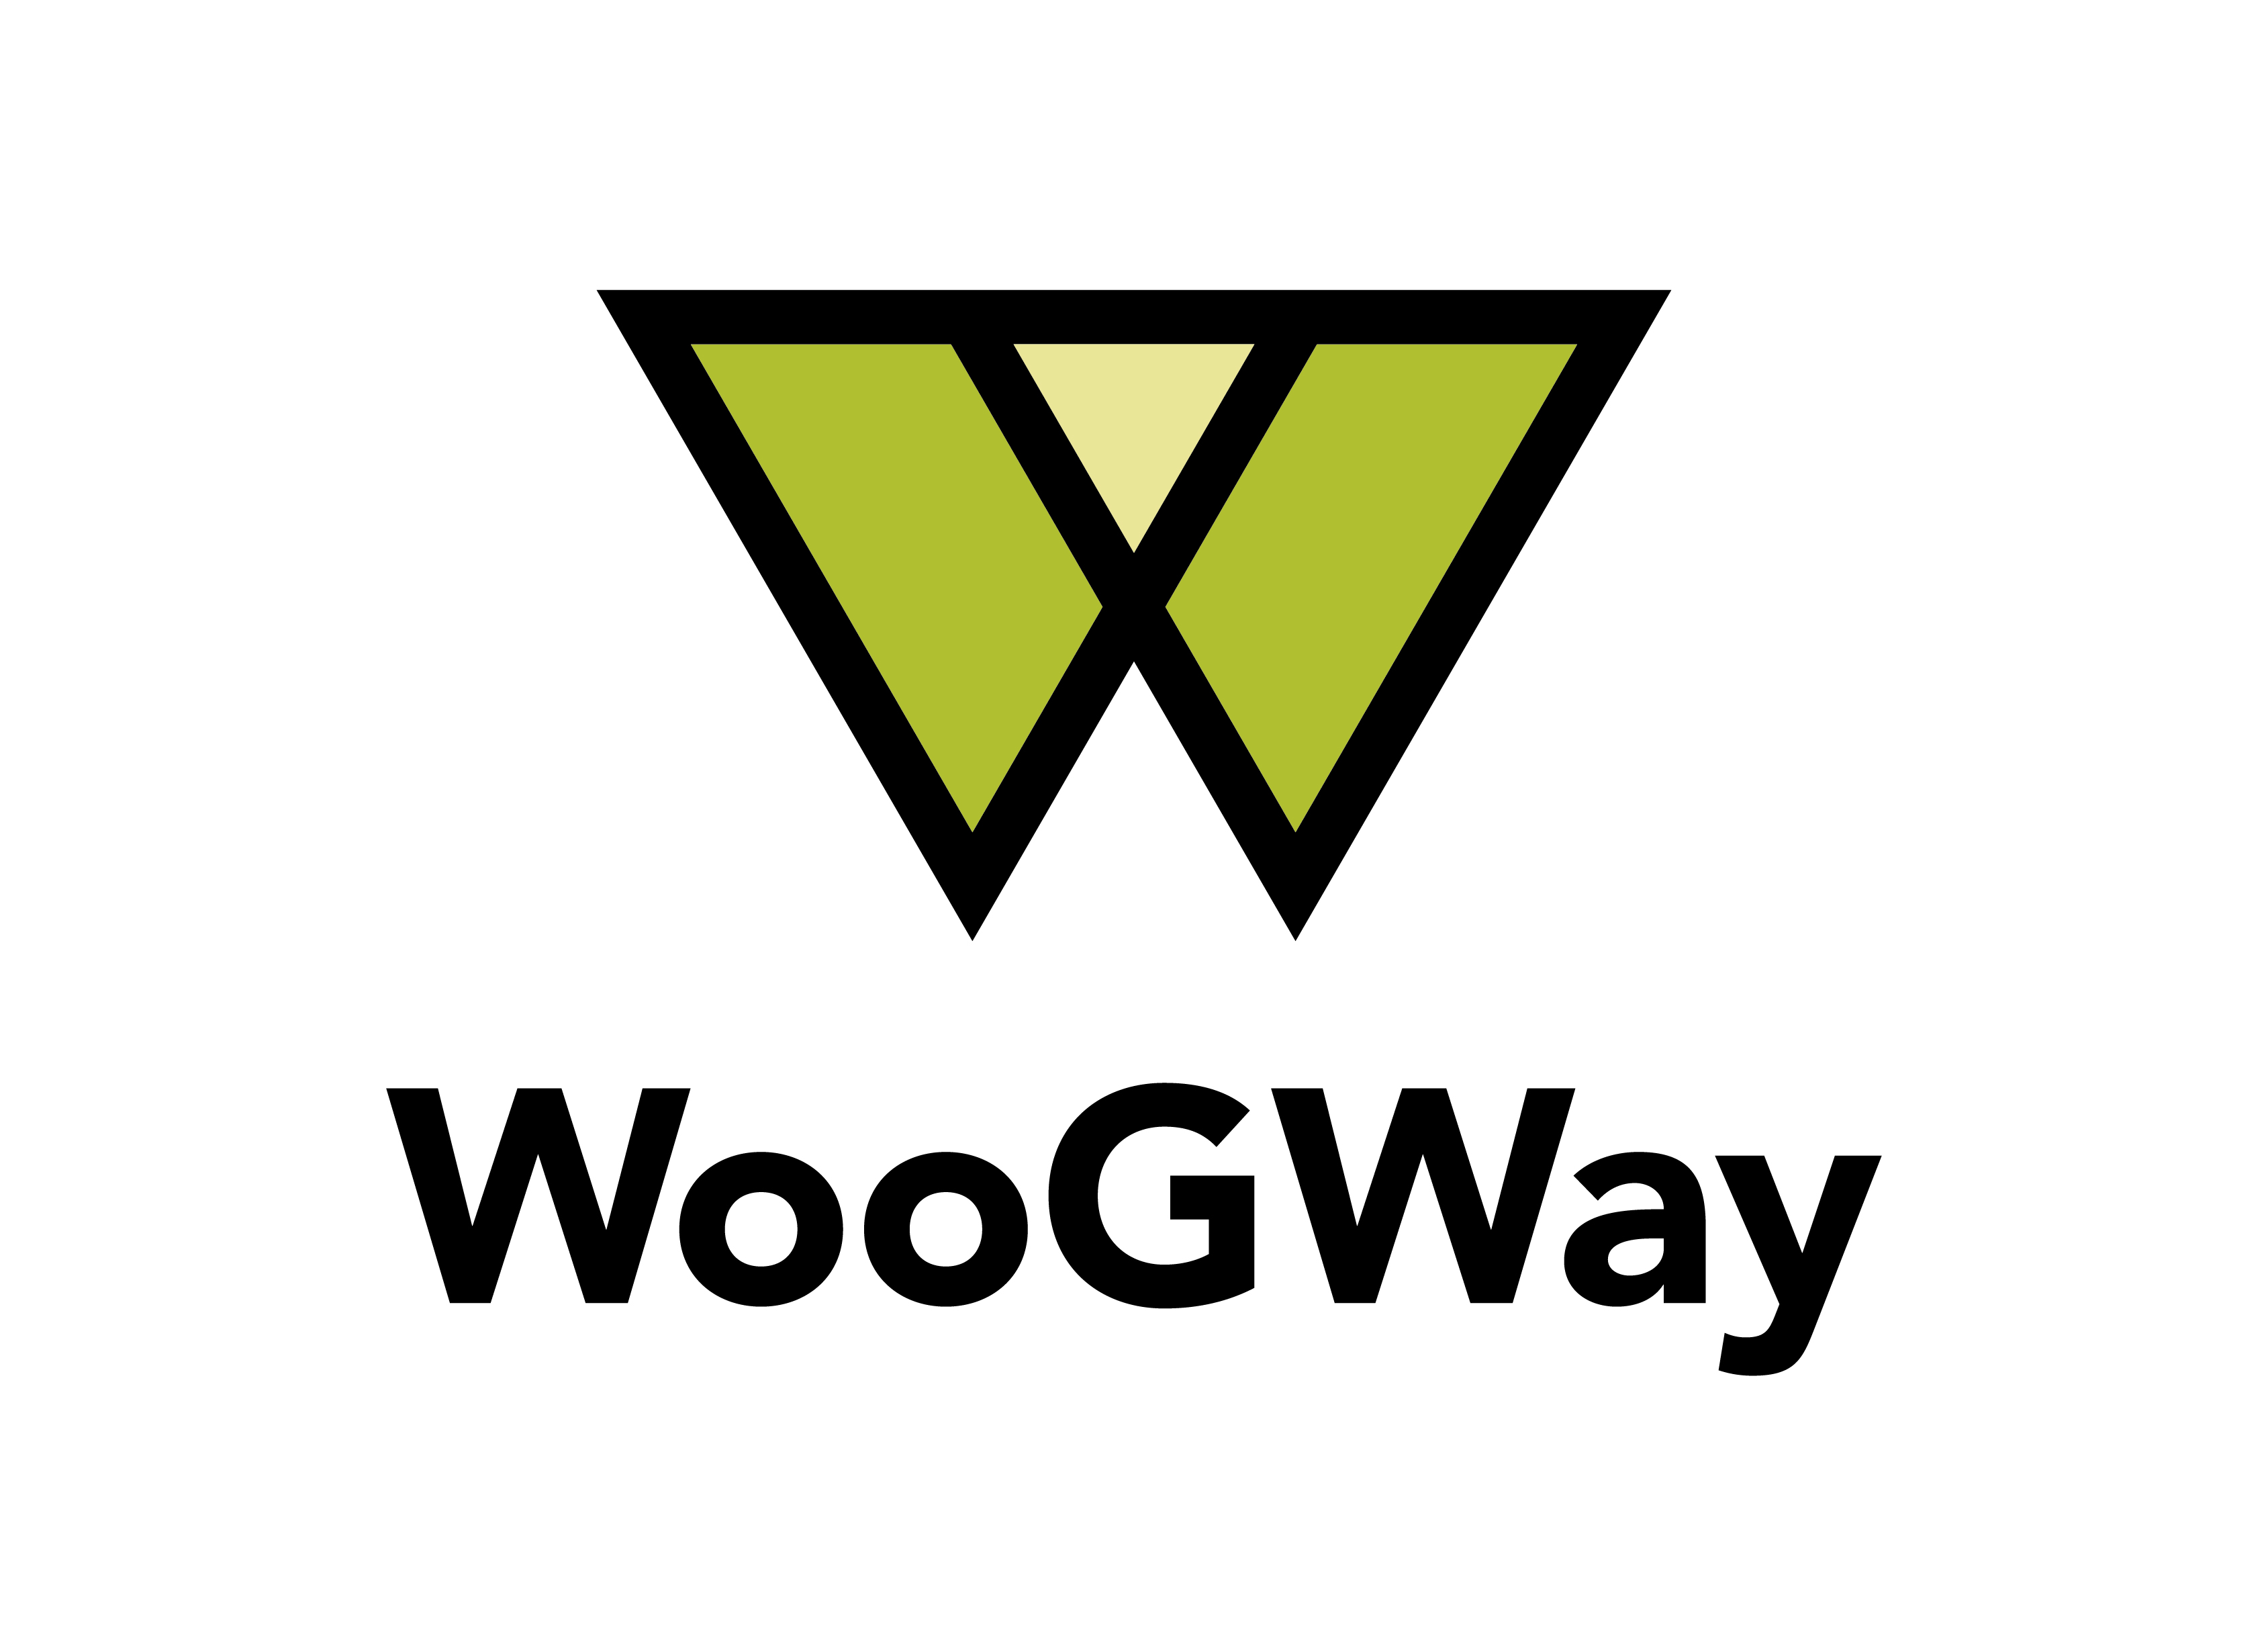 WooGWay株式会社